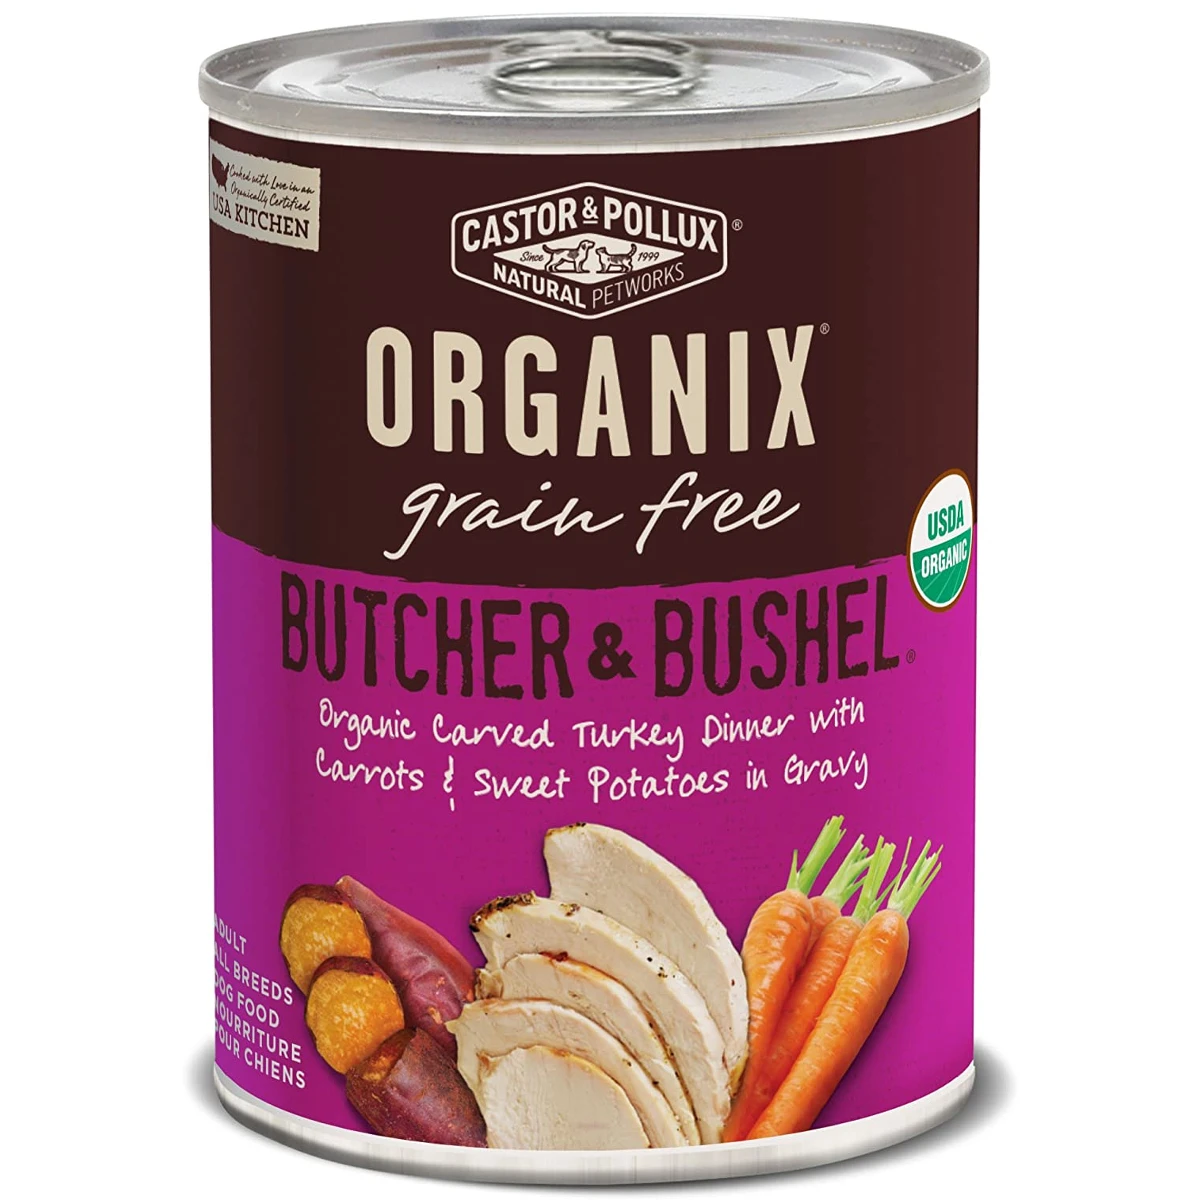 Castor Pollux Organix Butcher Bushel Organic Carved Turkey Dinner Wet Dog Food